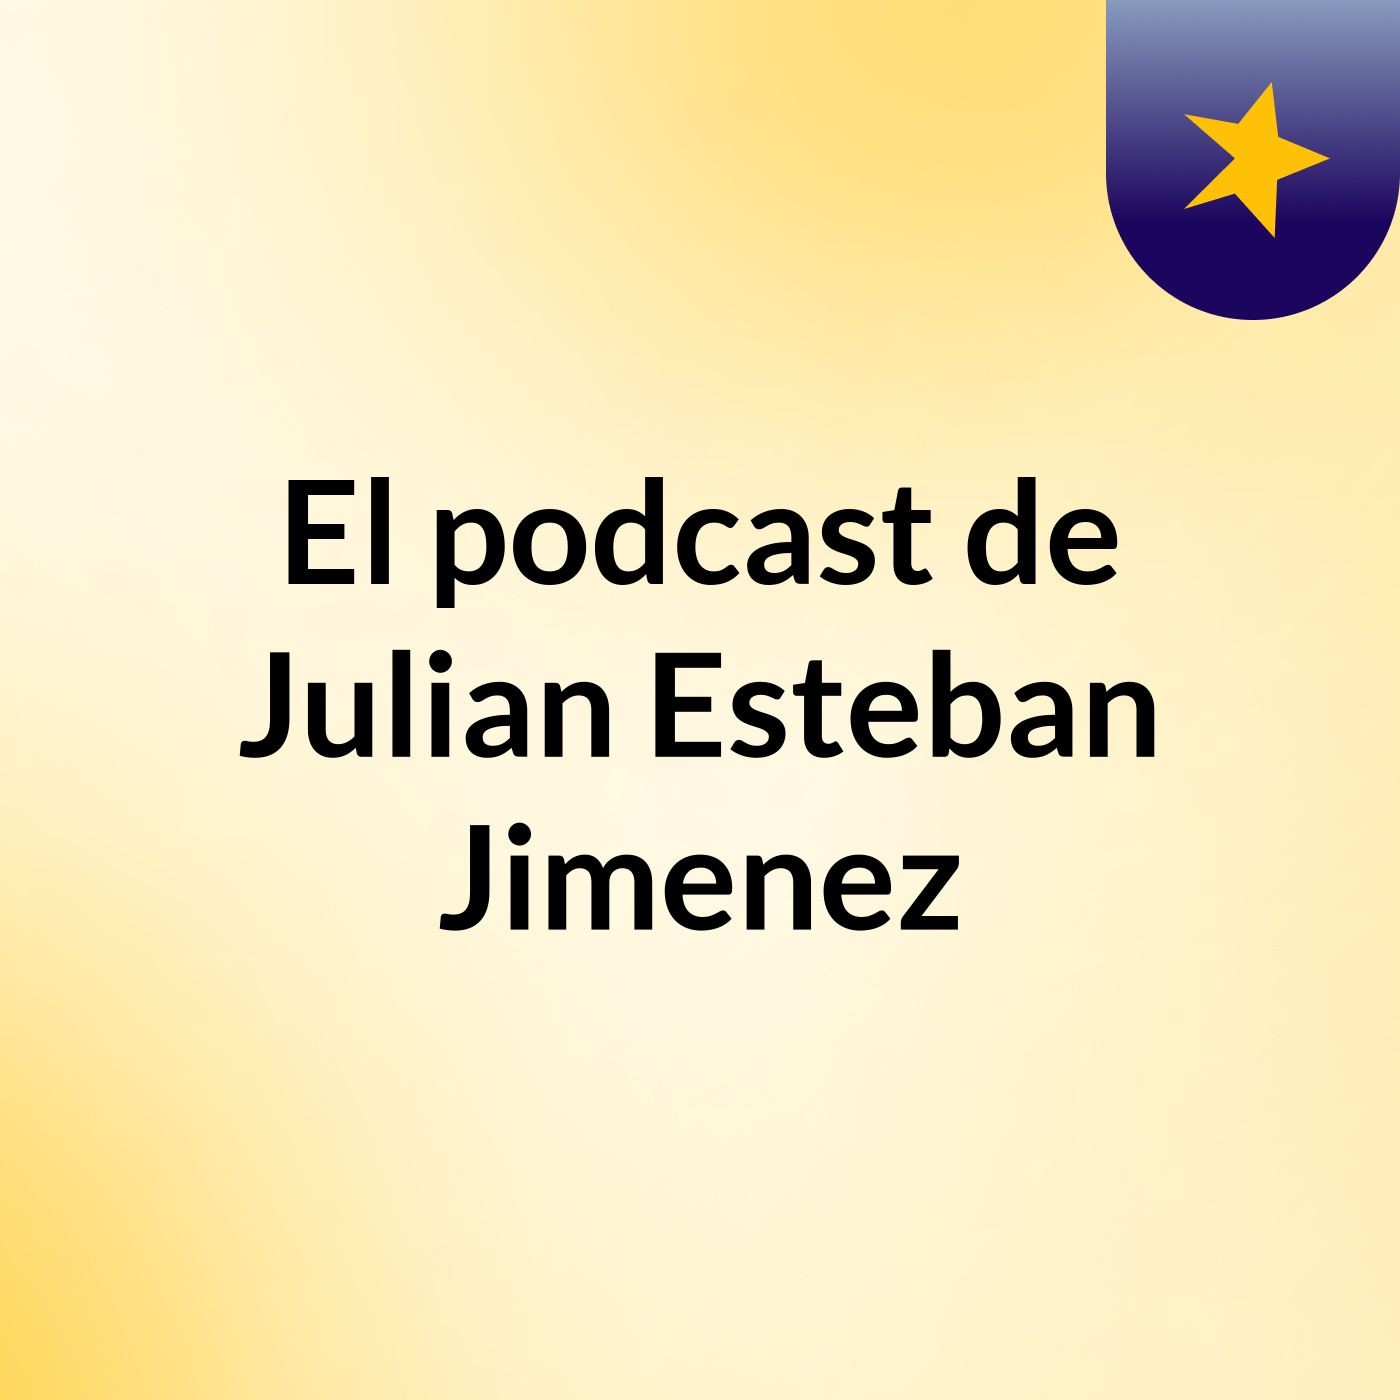 El podcast de Julian Esteban Jimenez